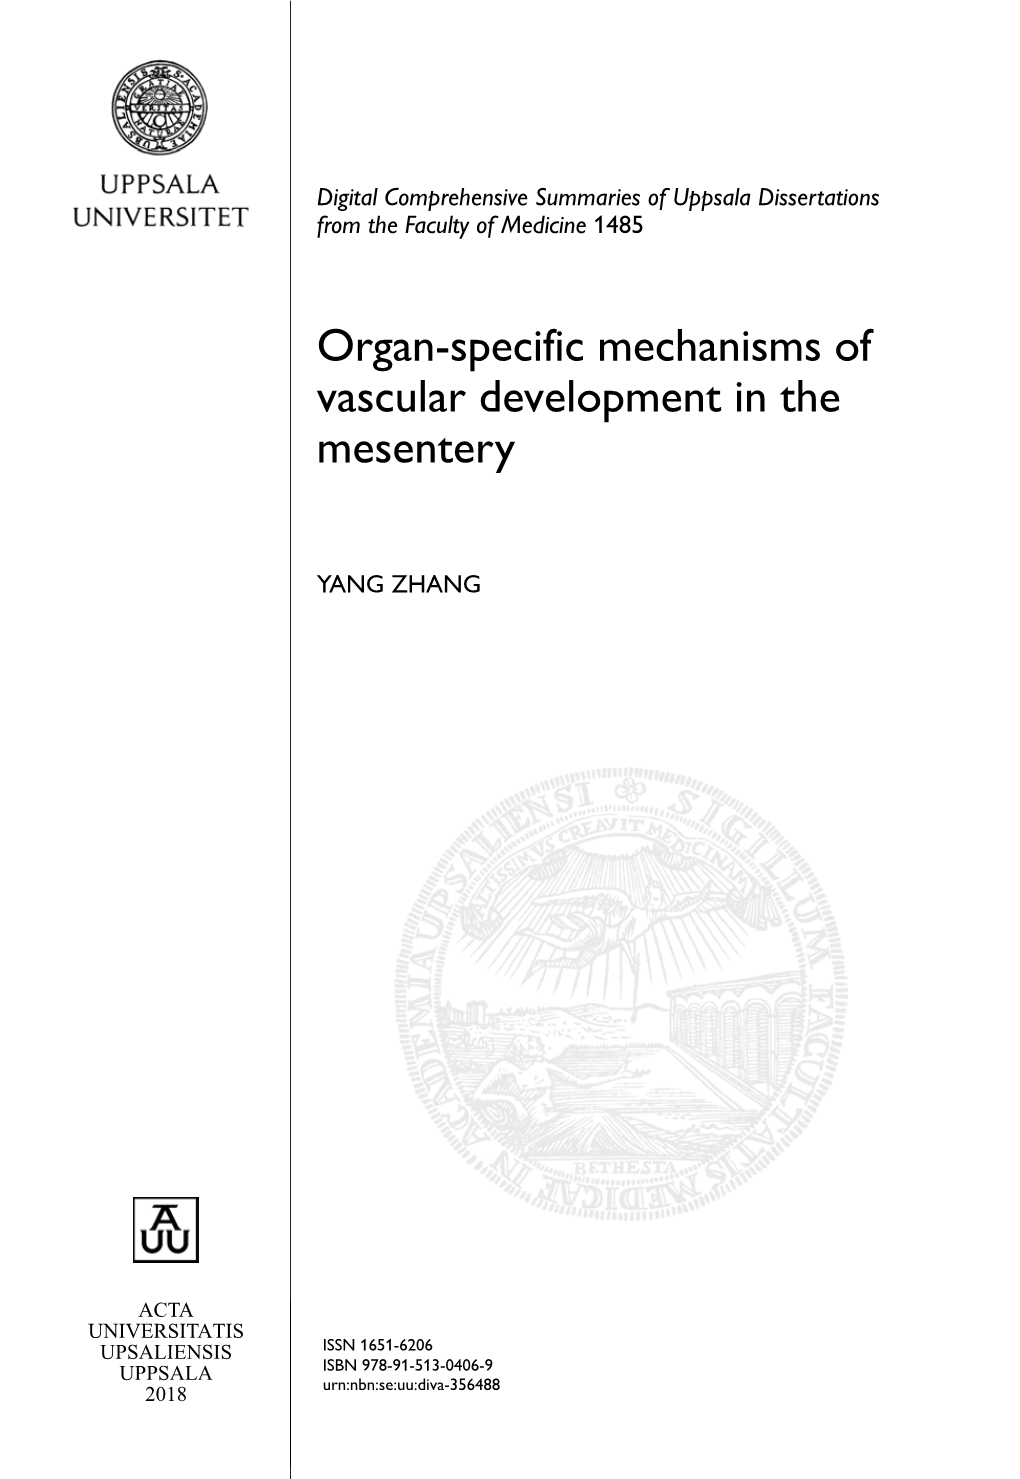 Organ-Specific Mechanisms of Vascular Development in the Mesentery